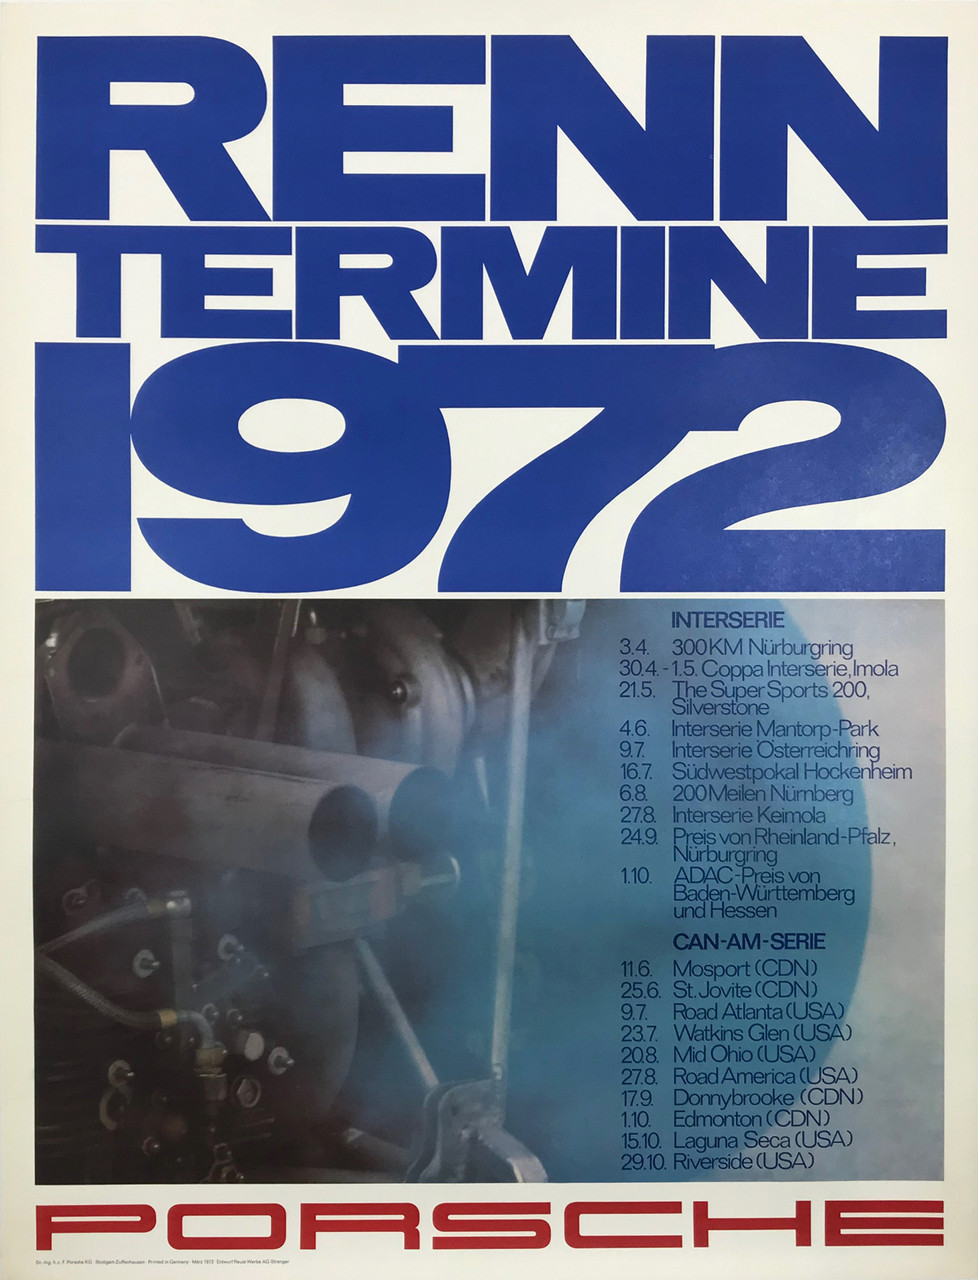 Porsche Renn Termine 1972 Original Vintage German Strenger Studio Car Racing Promotional Advertisement Poster Linen Backed.